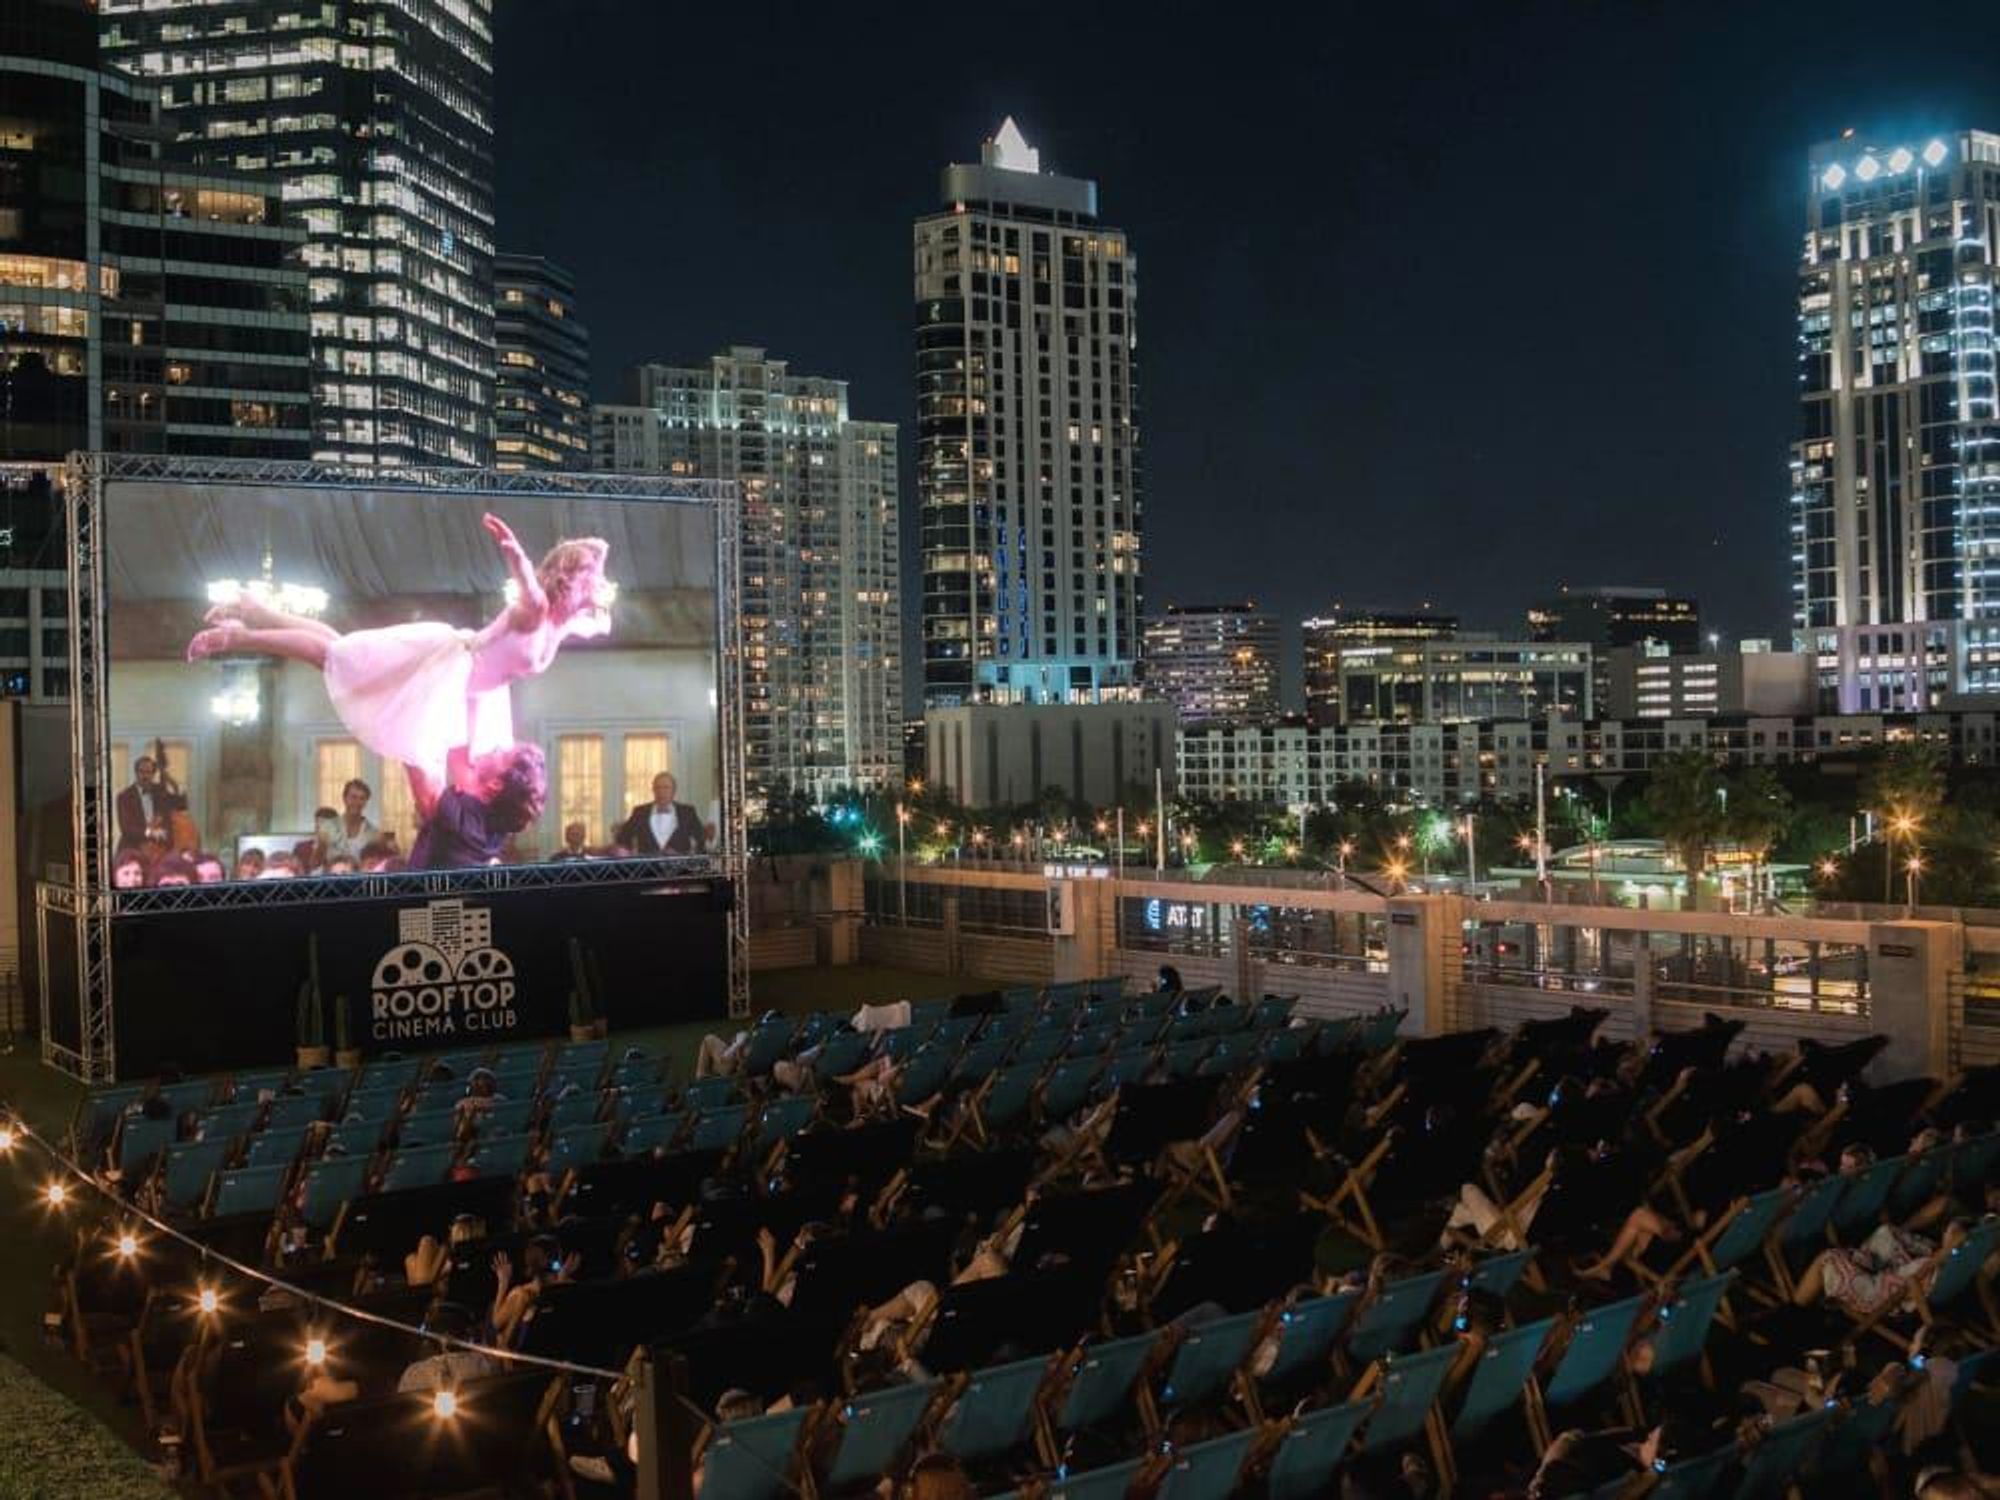 Rooftop Cinema Club Houston night skyline